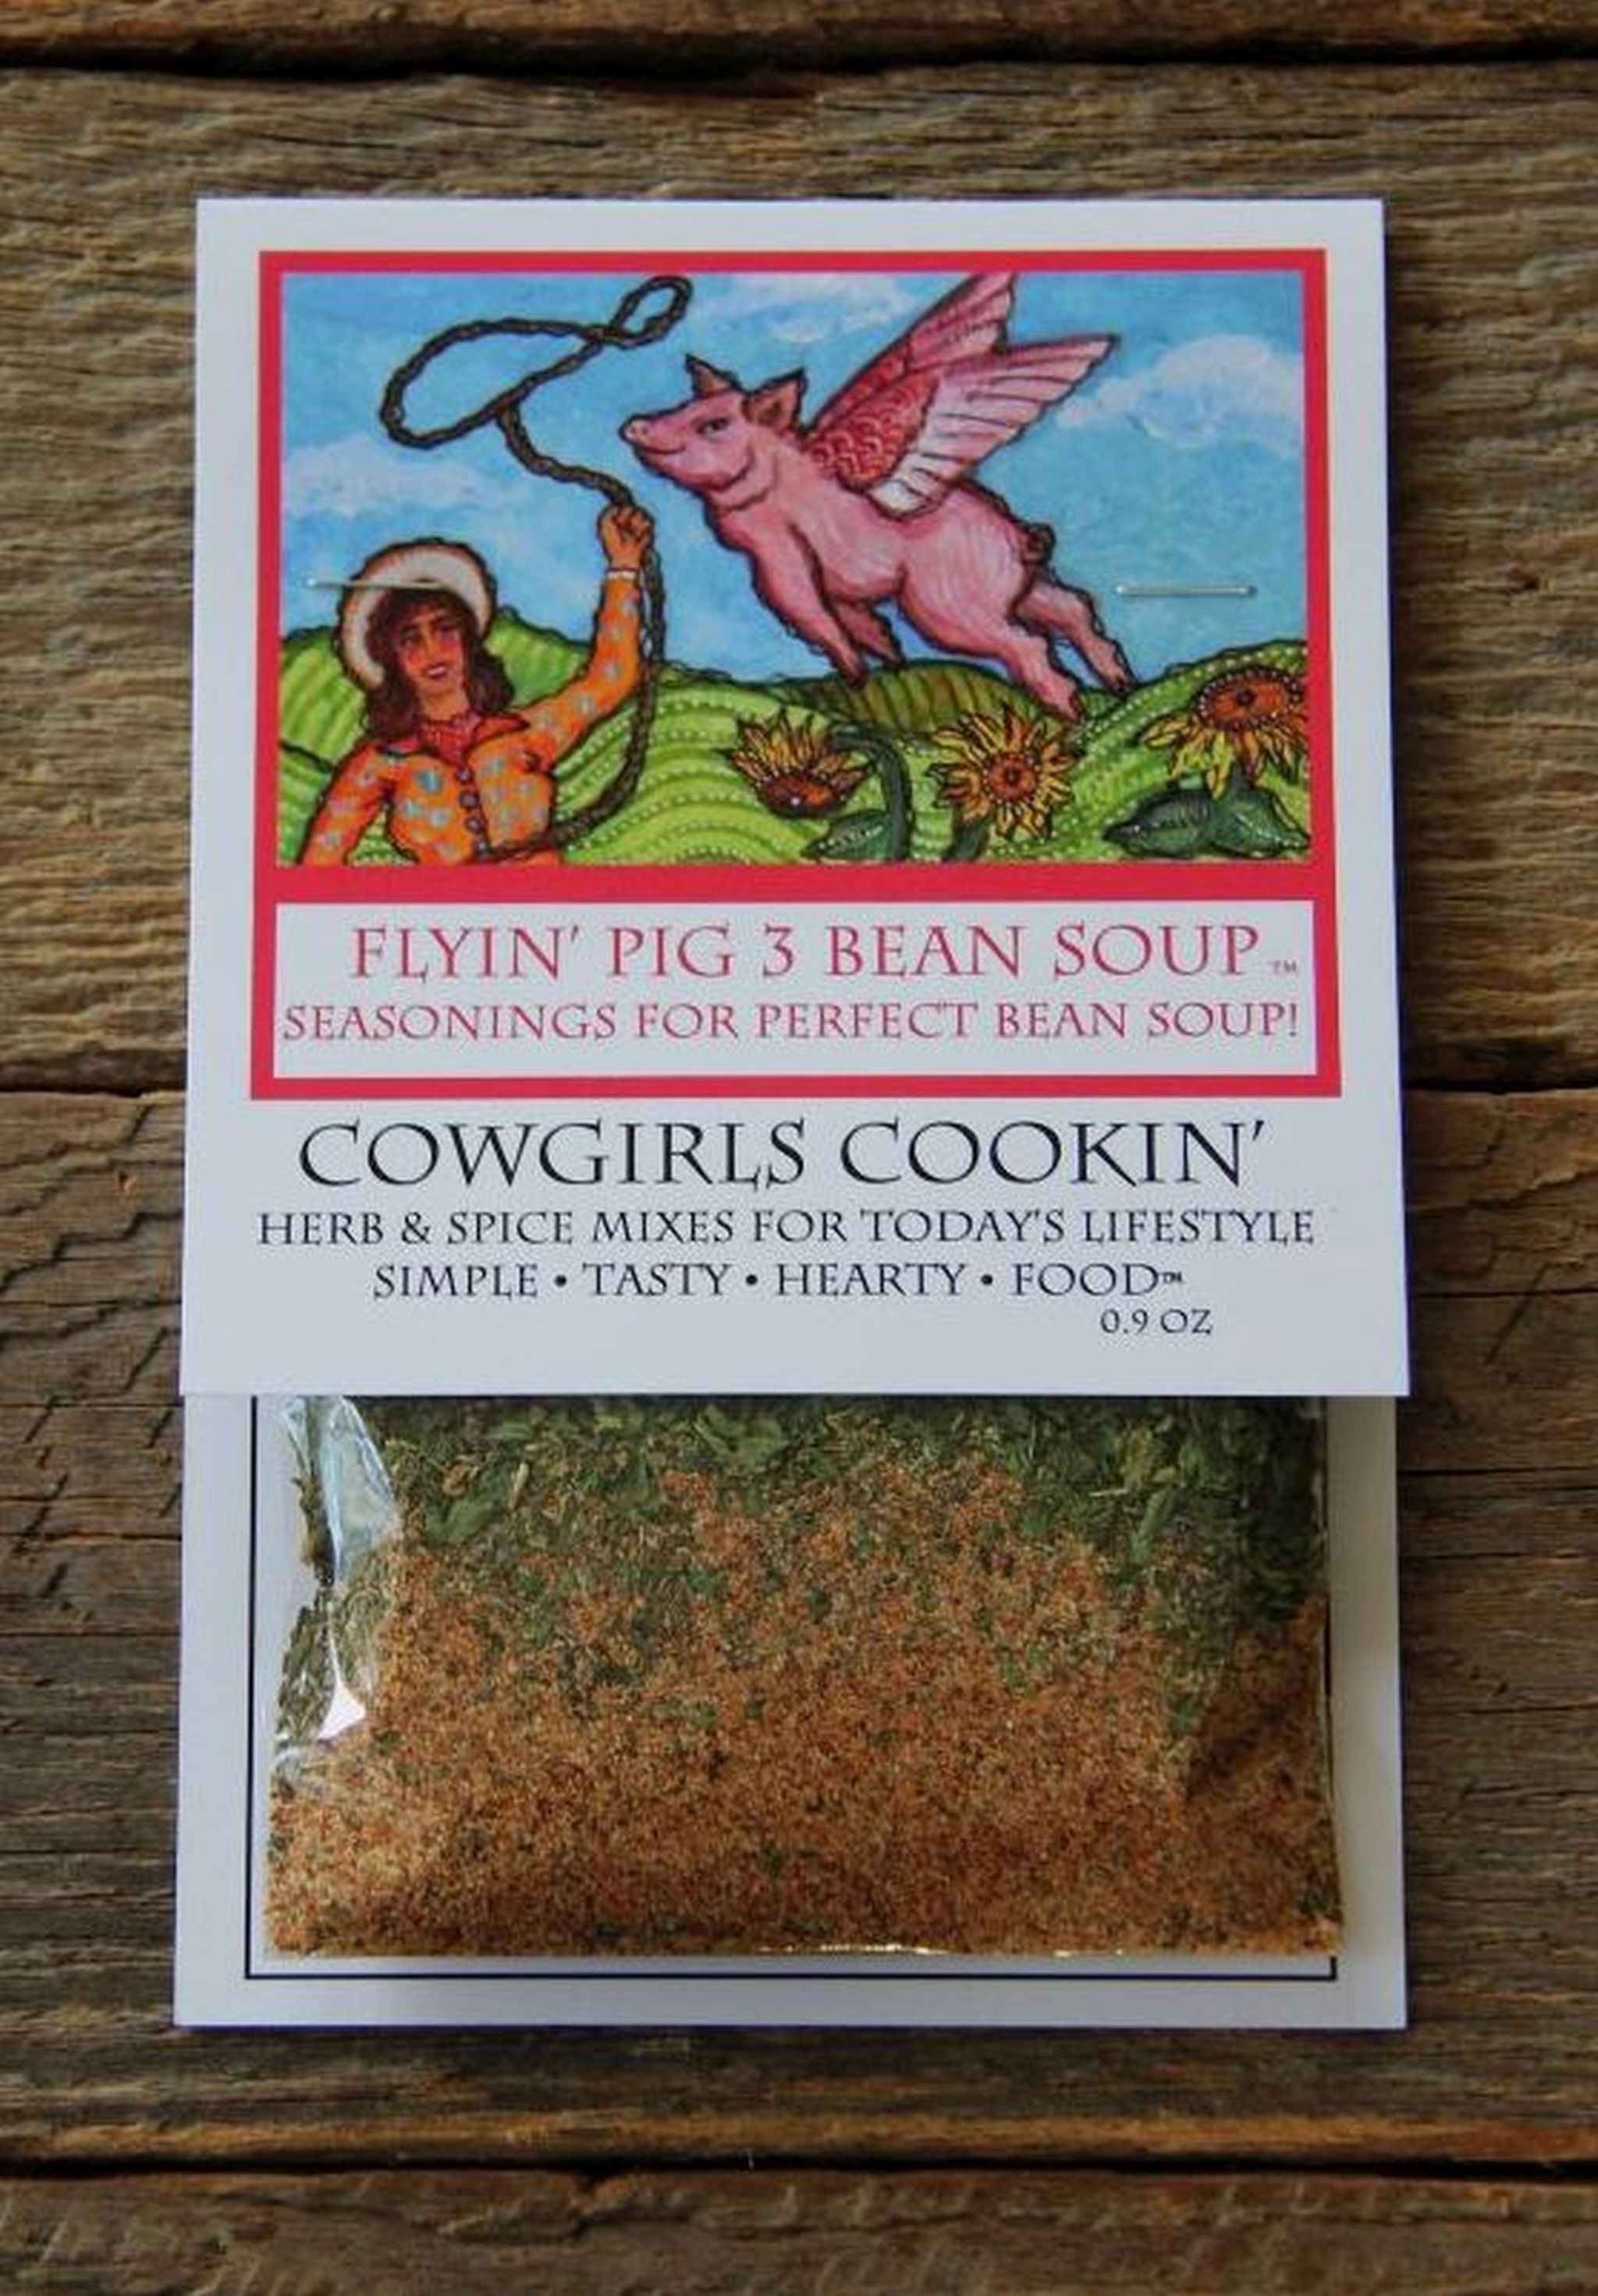 Cowgirls Cookin', Bean Soup Recipe, best bean soup, quick bean soup, freezes well, Melissa Cole artist, canned beans, Instant Pot